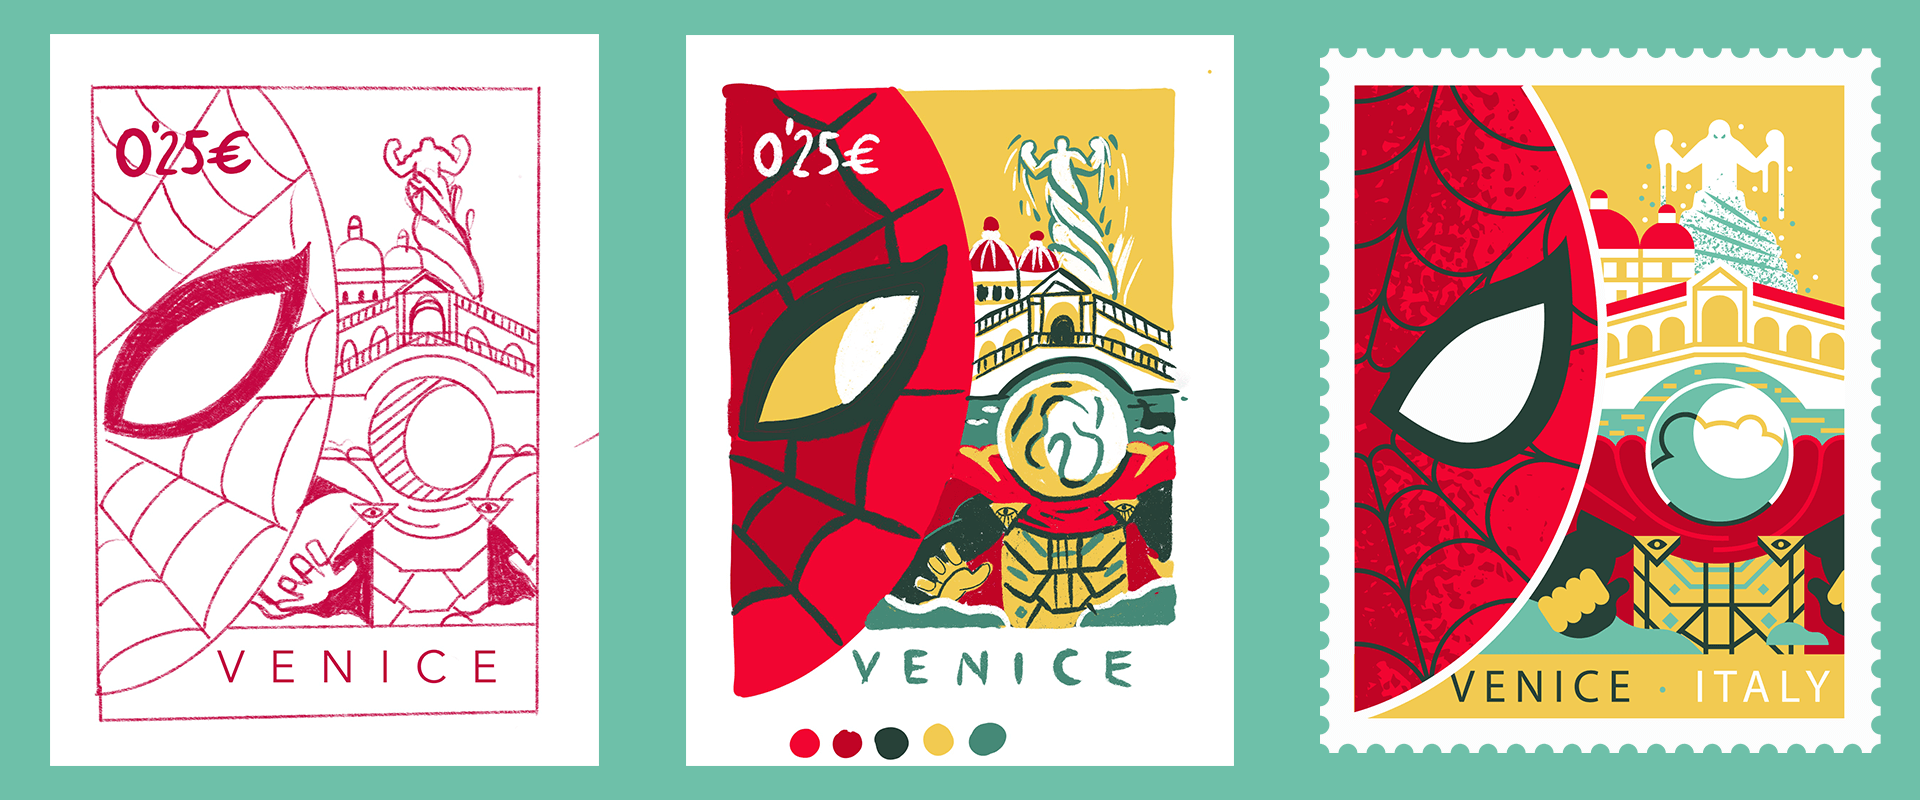 Spider-Man-Far-From-Home-Alternative-Movie-Poster-design